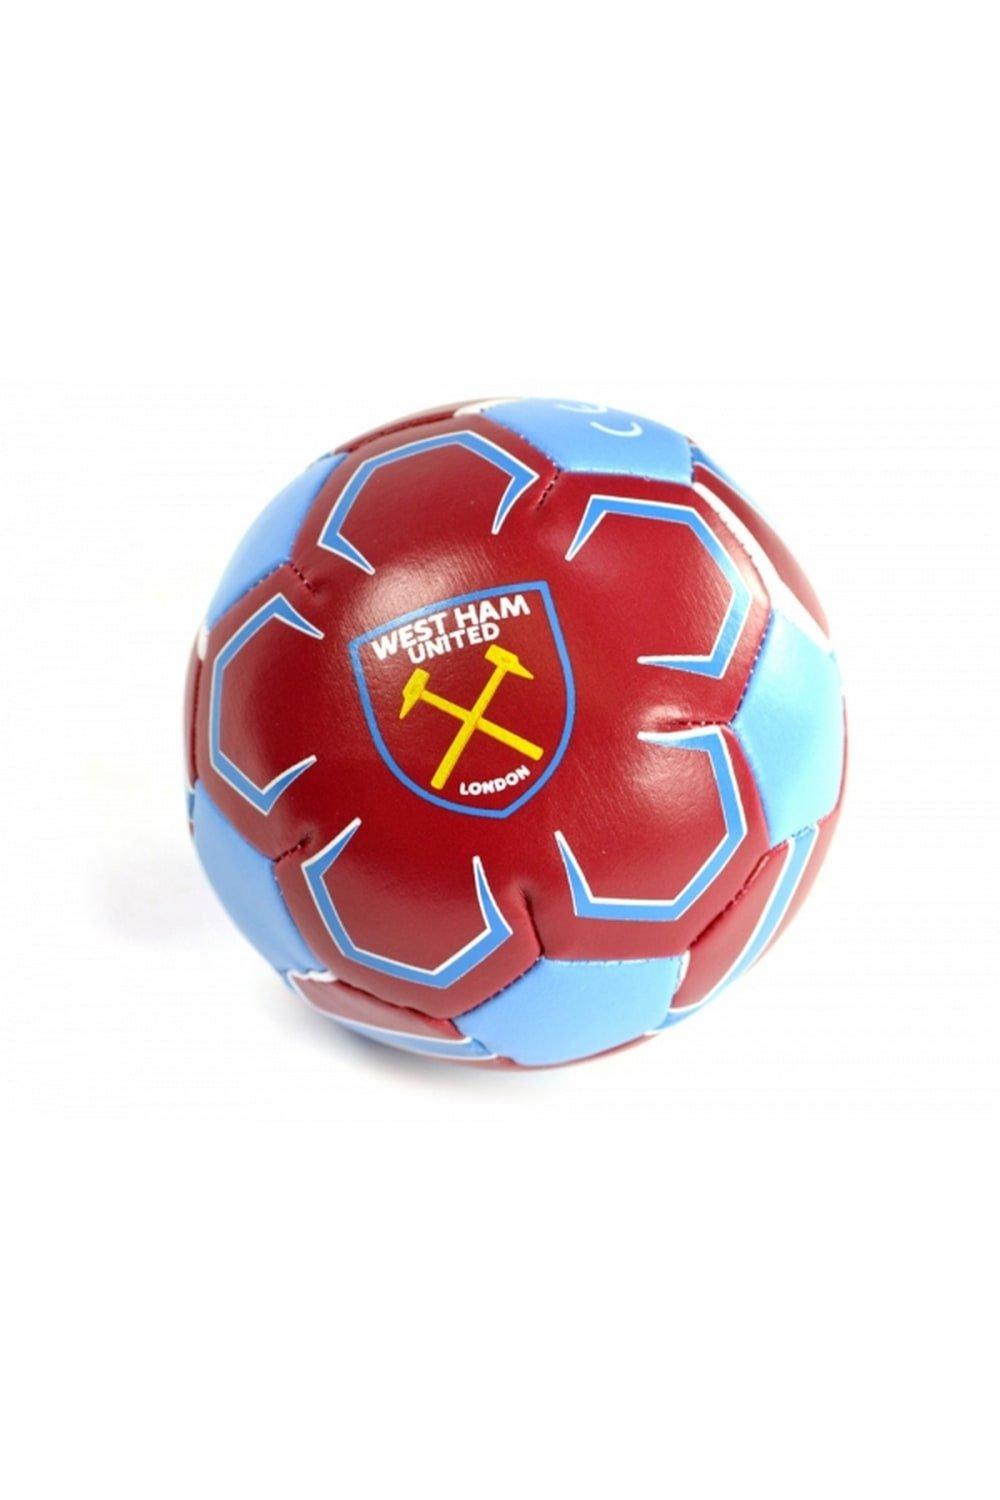 West Ham FC Official 4 Inch Mini Soft Football